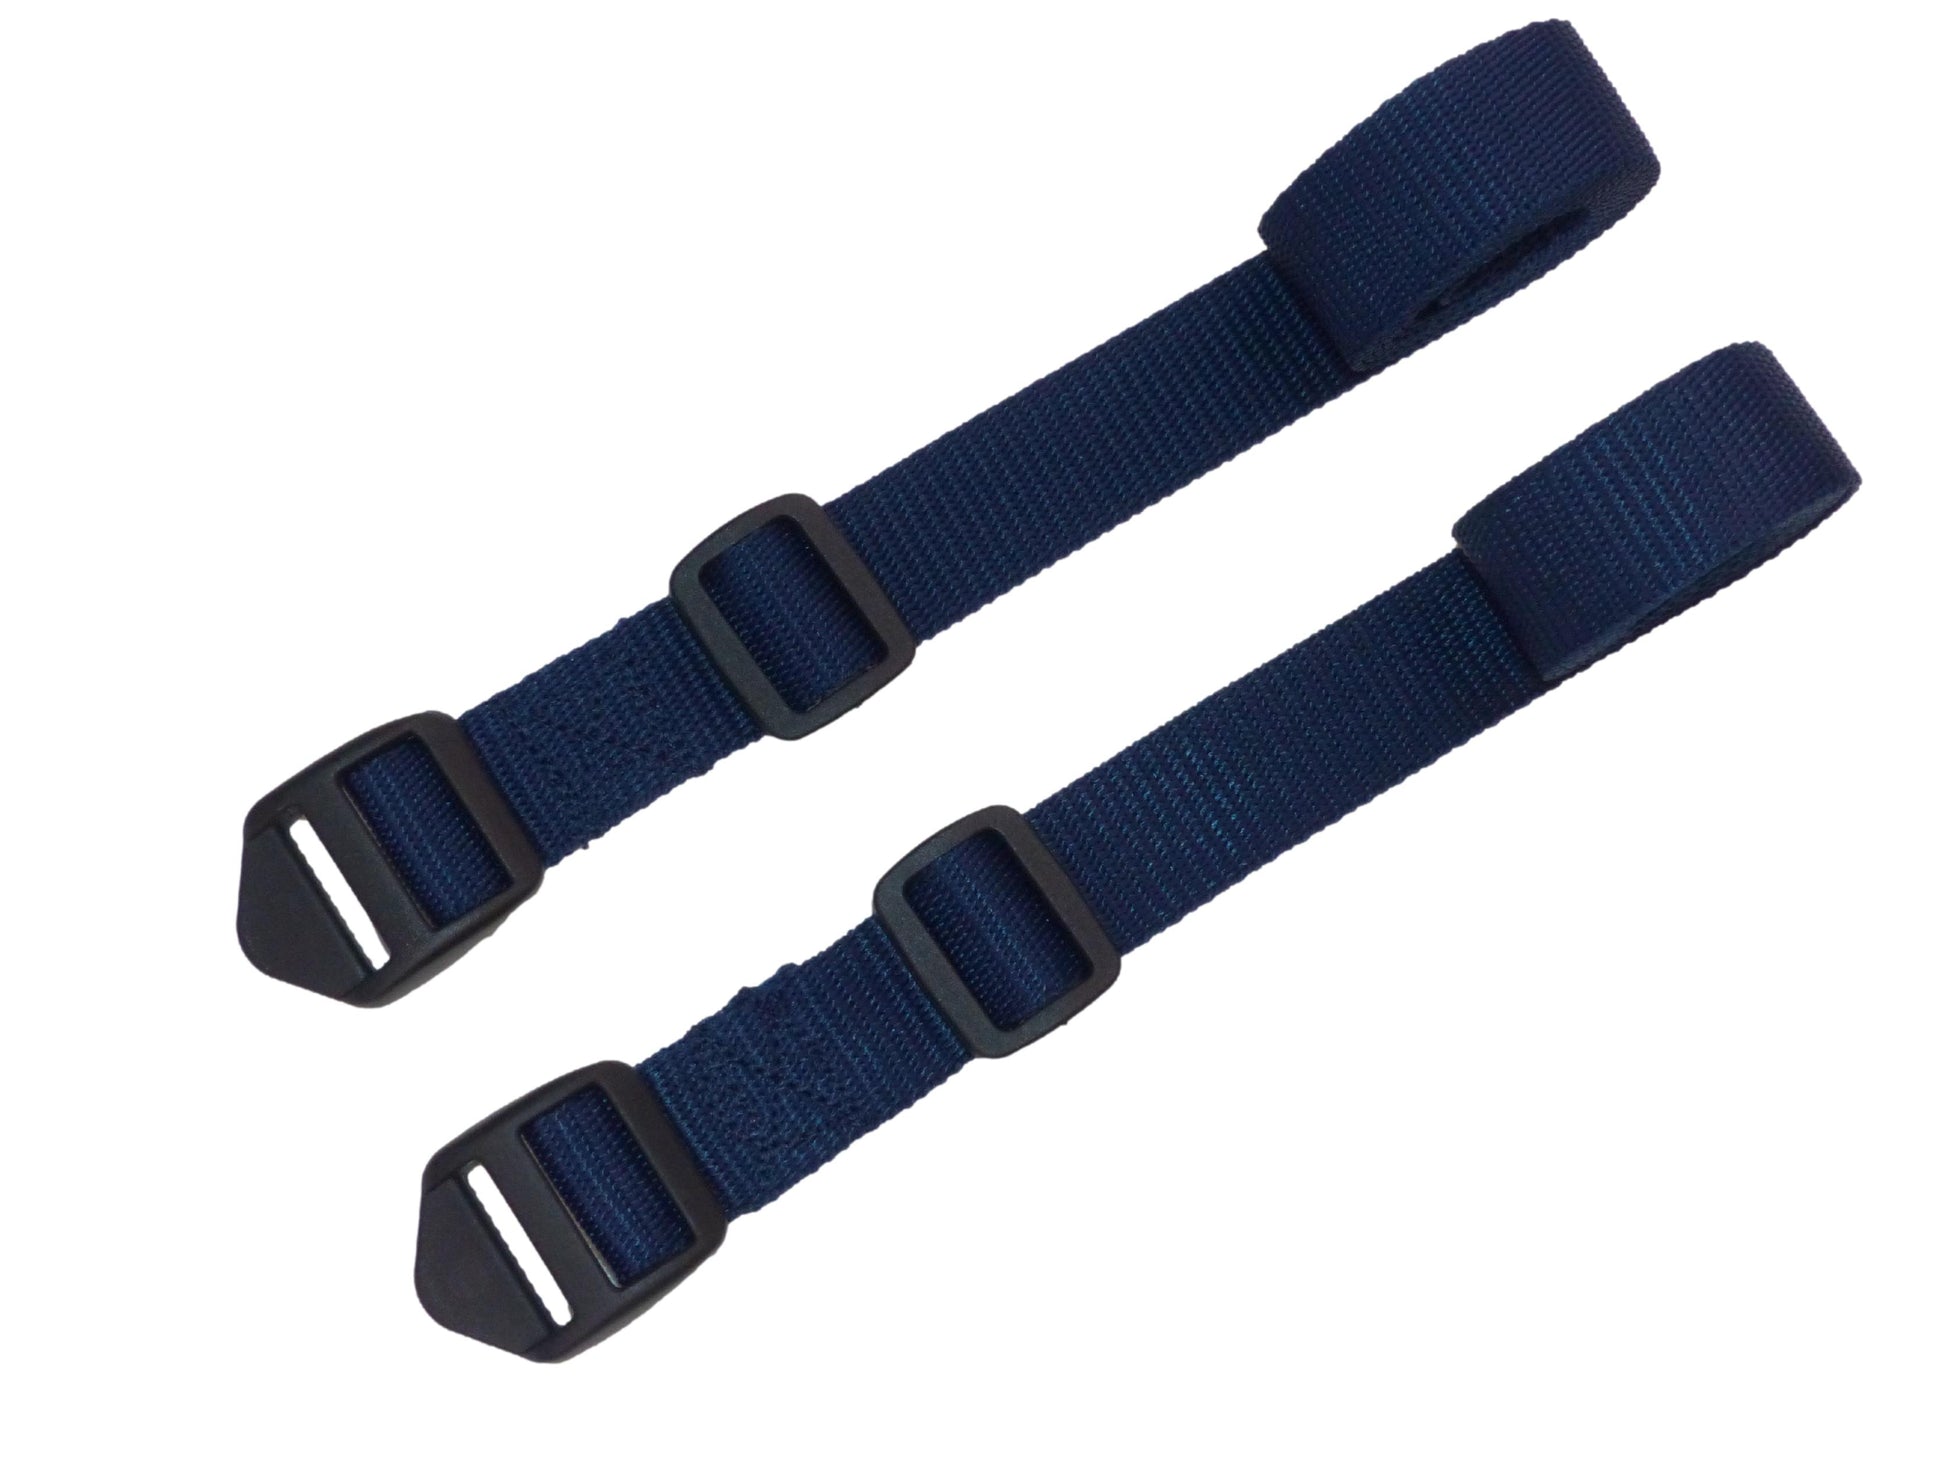 Benristraps 25mm Webbing Strap with Ladderloc Buckle (Pair) in navy blue